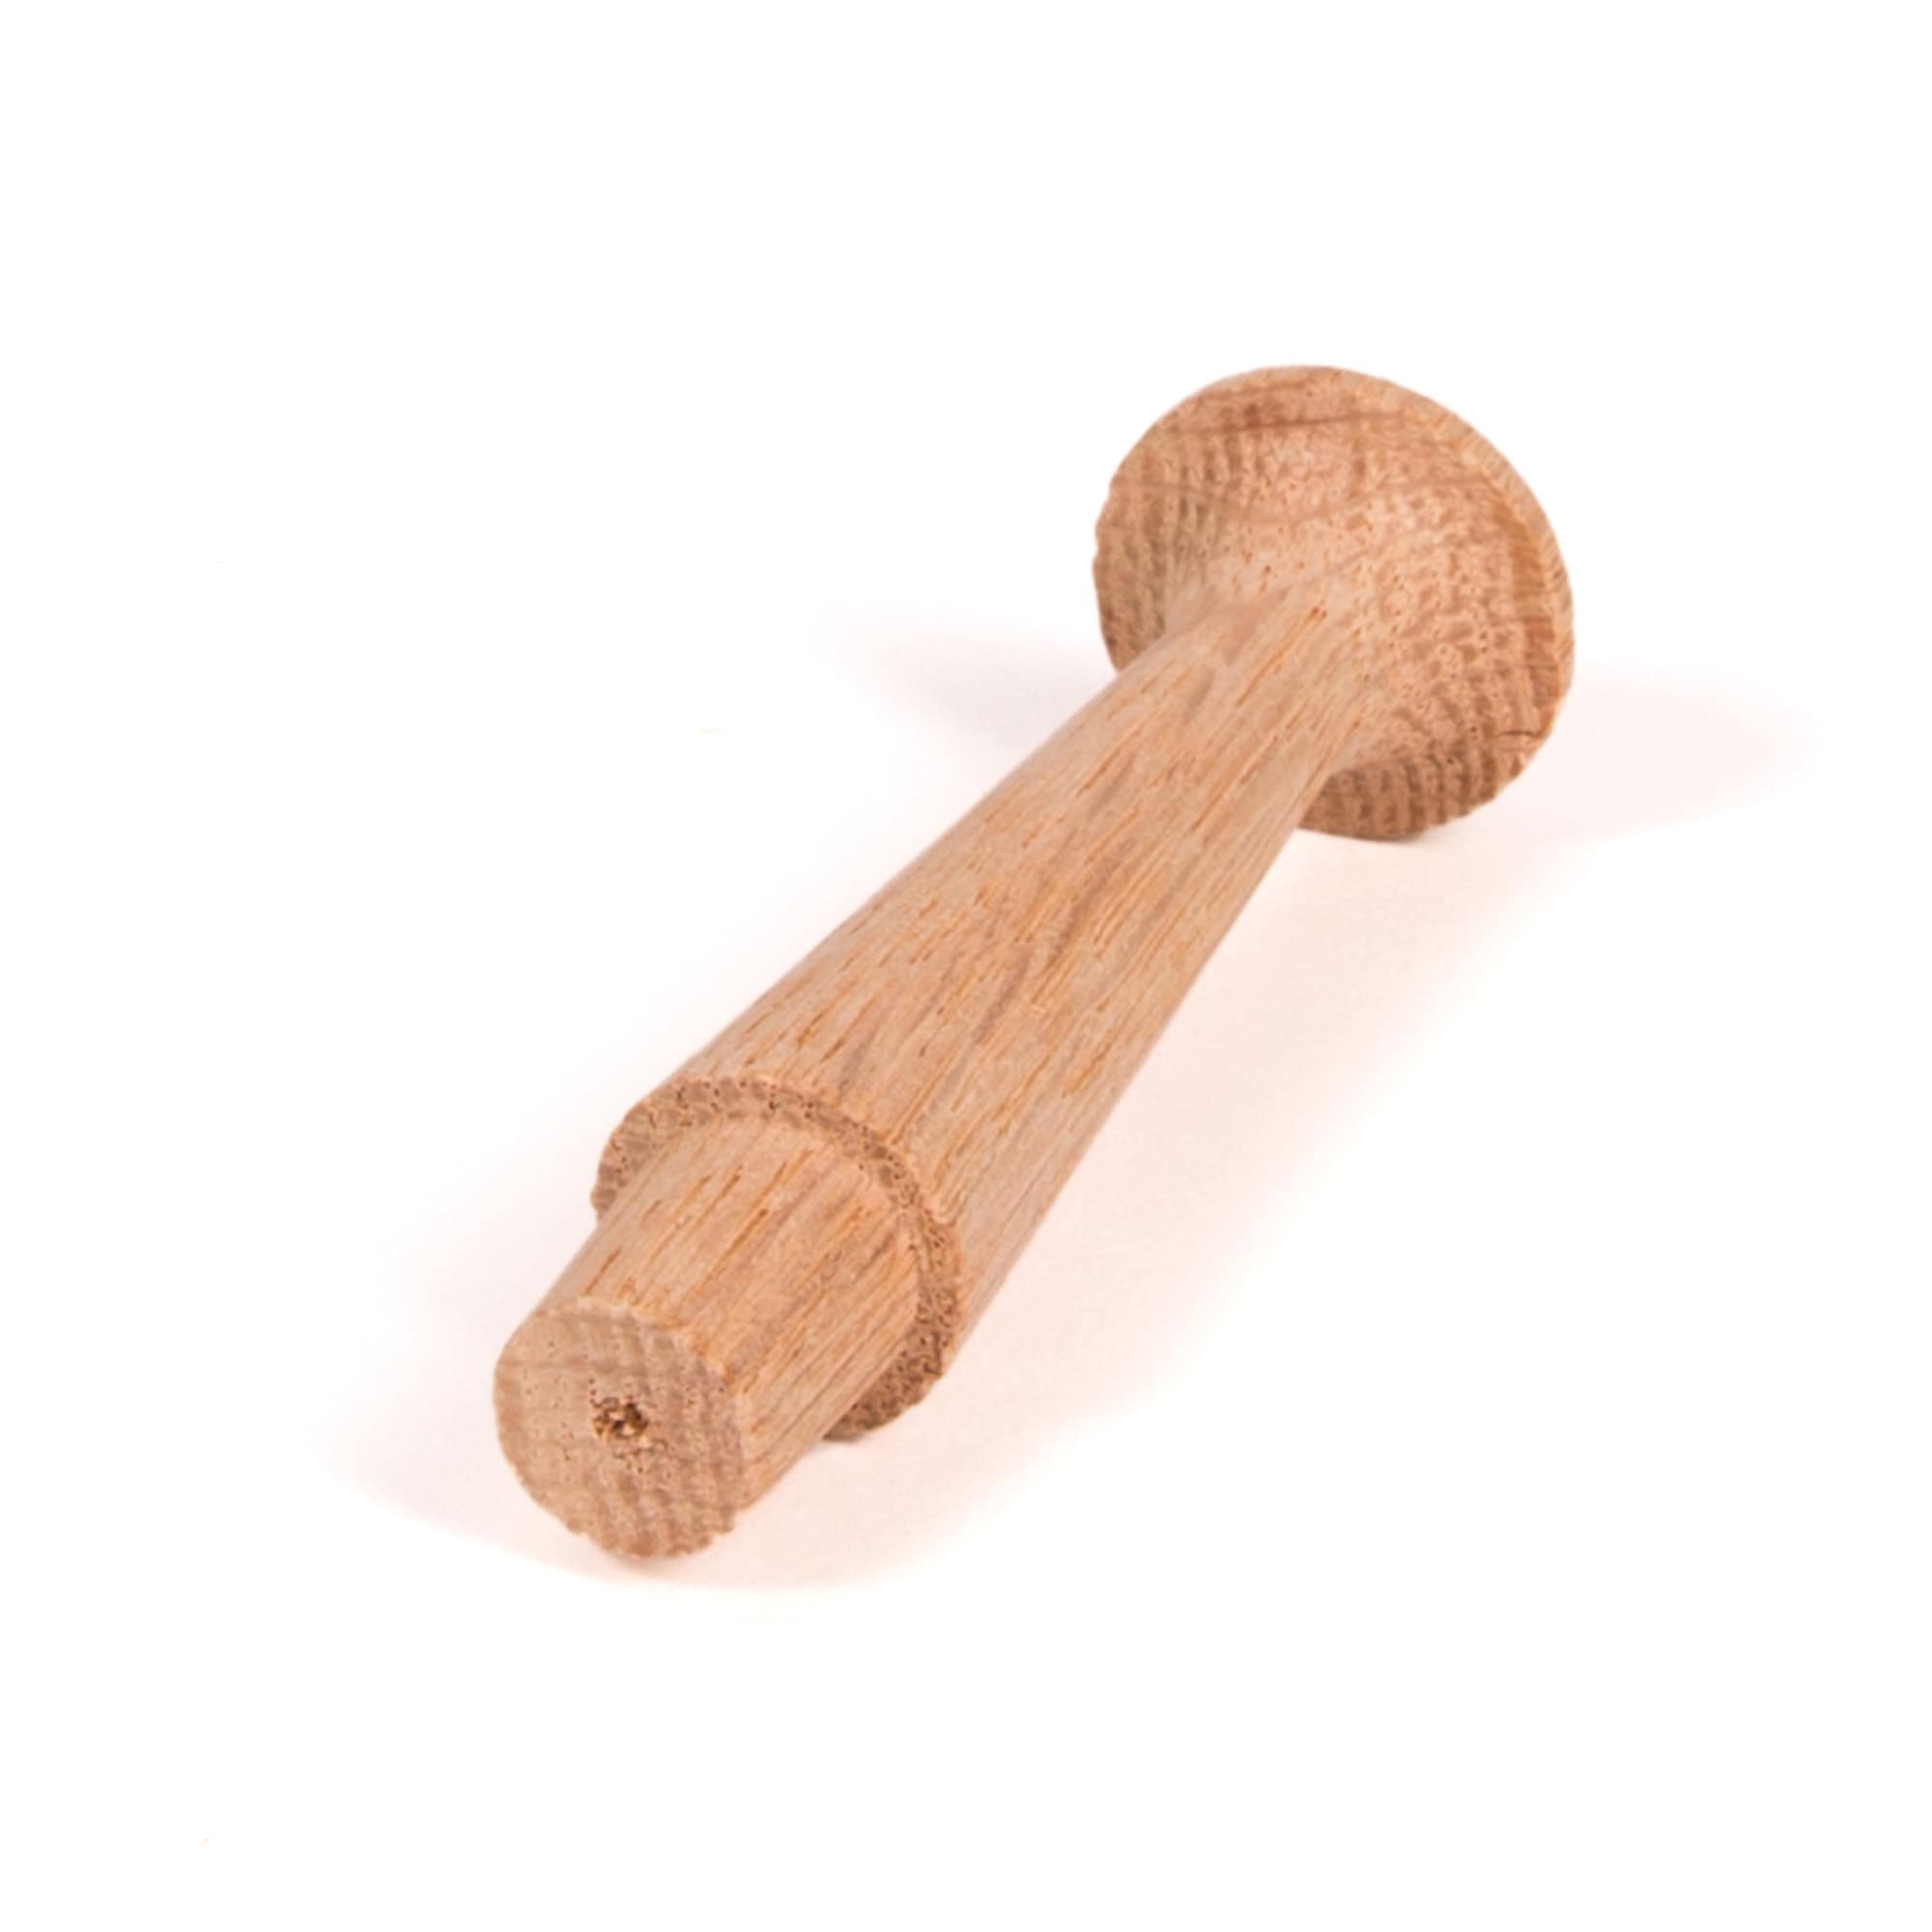 Loose Shaker Pegs & Bulk Shaker Pegs in solid Maple Wood